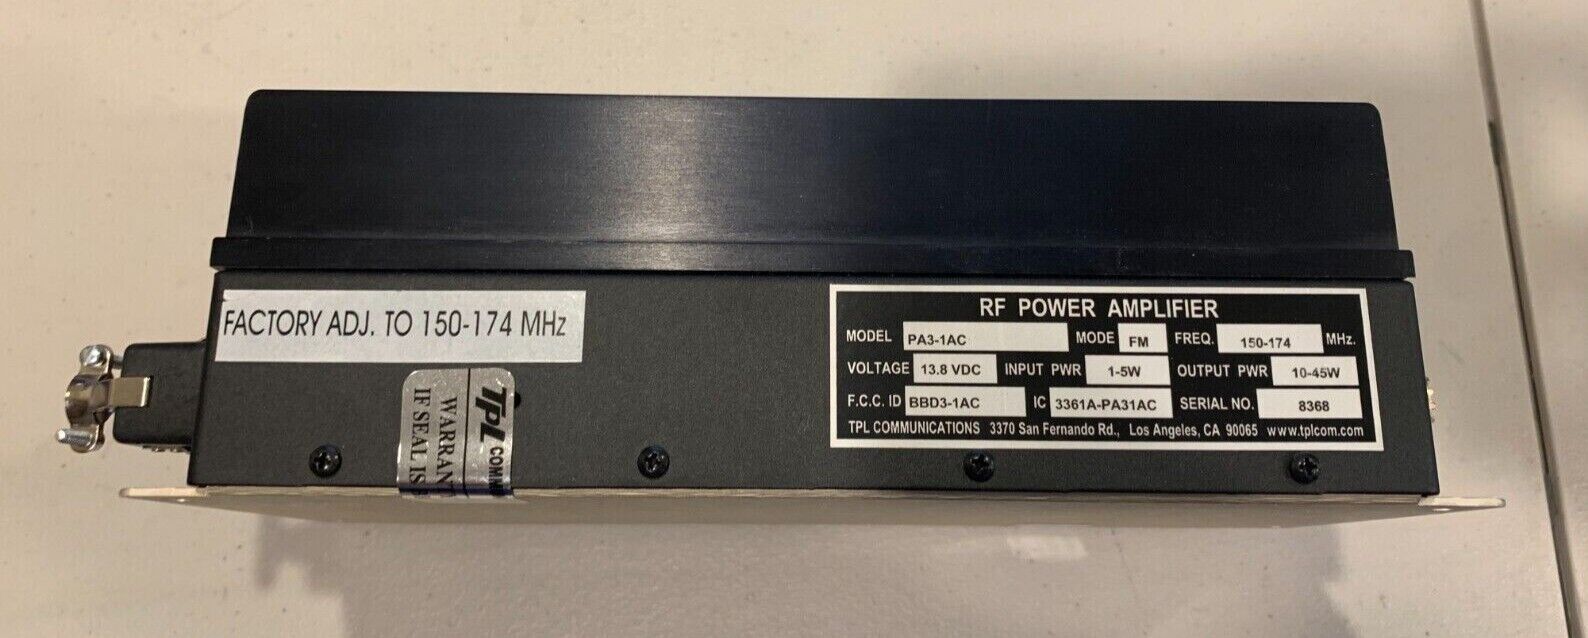 RF Power Amplifier Model PA3-1AC Mode FM Freq 150-174 45 watt, TPL Communication